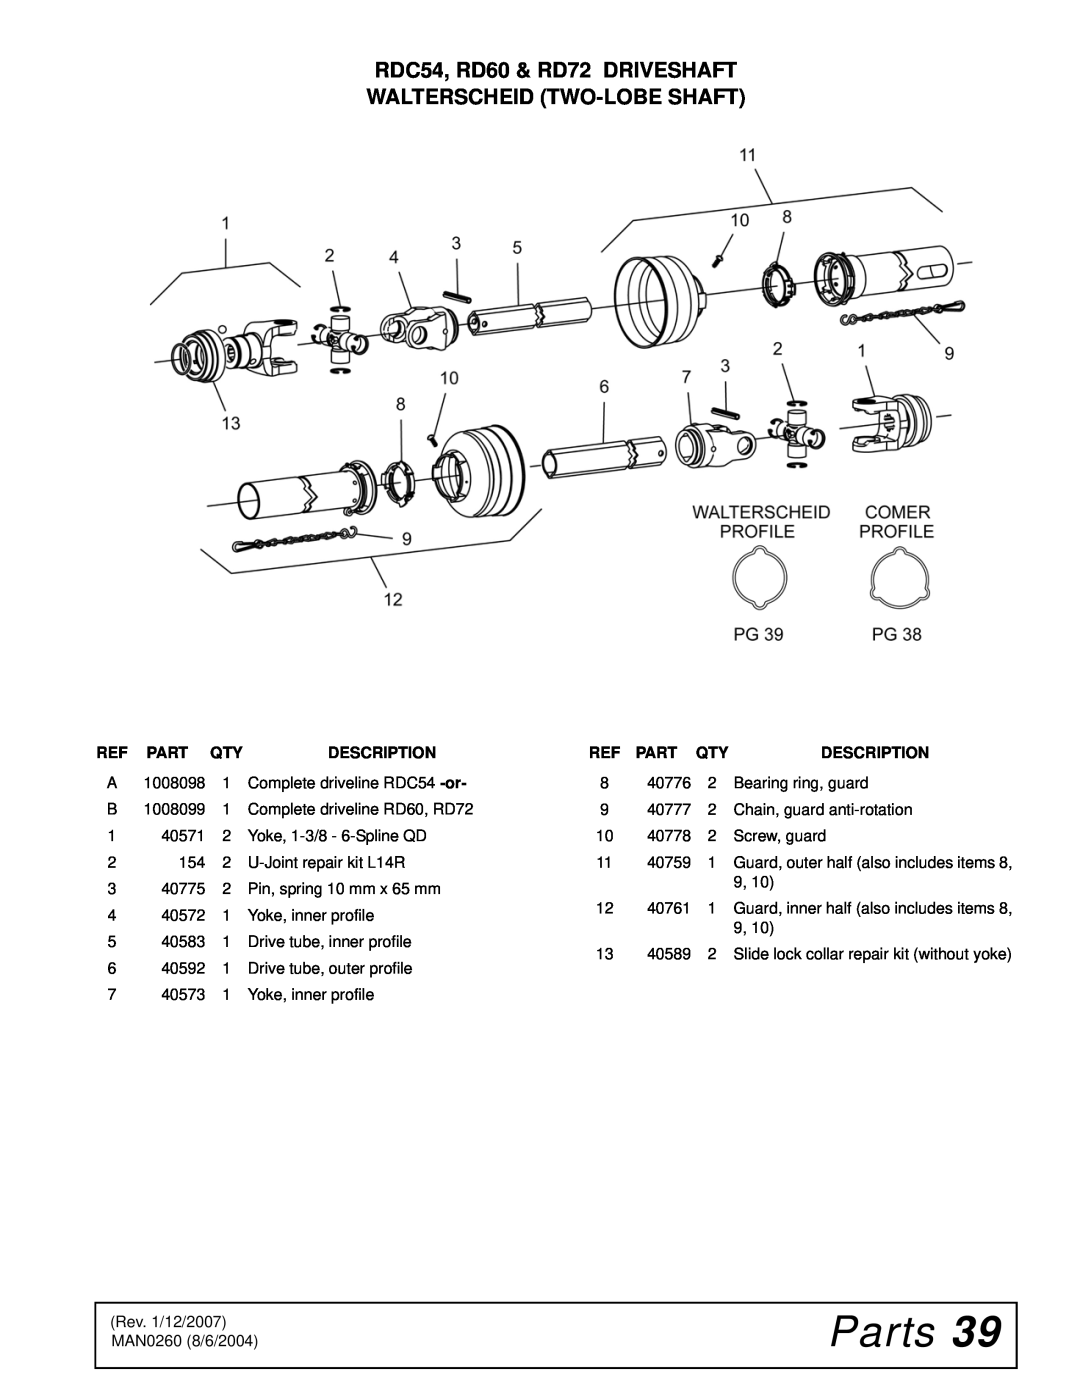 Woods Equipment RDC54, RD72, RD60 manual Parts, Description, 40776, Bearing ring, guard 